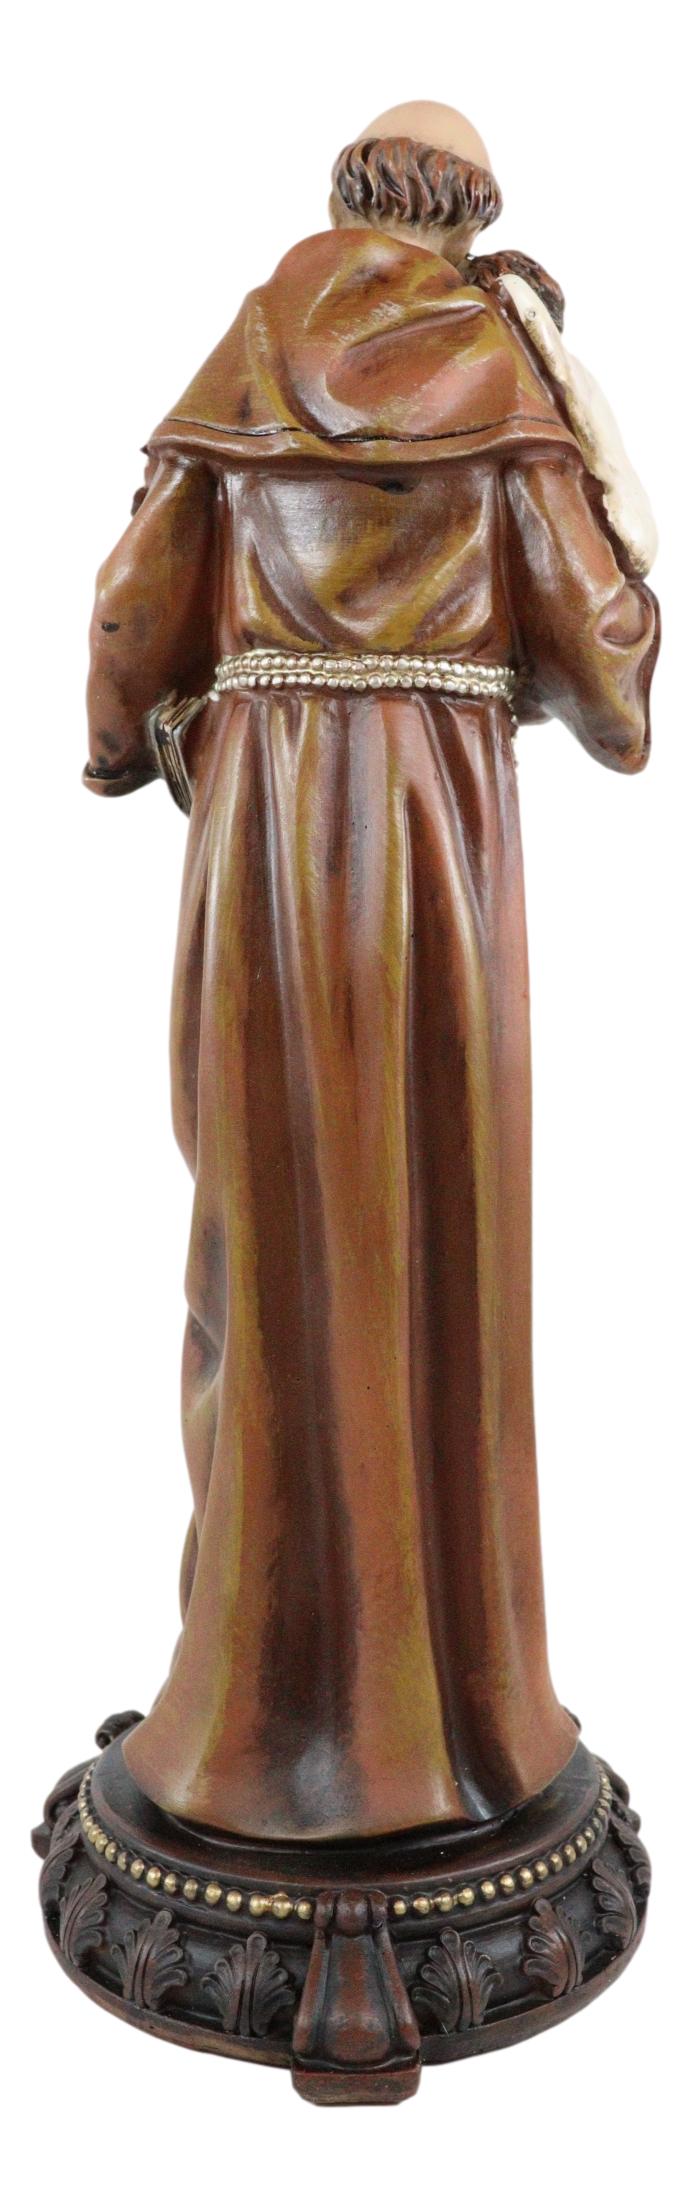 Catholic Saint Anthony of Padua Carrying Baby Jesus Lilies Scriptures Figurine